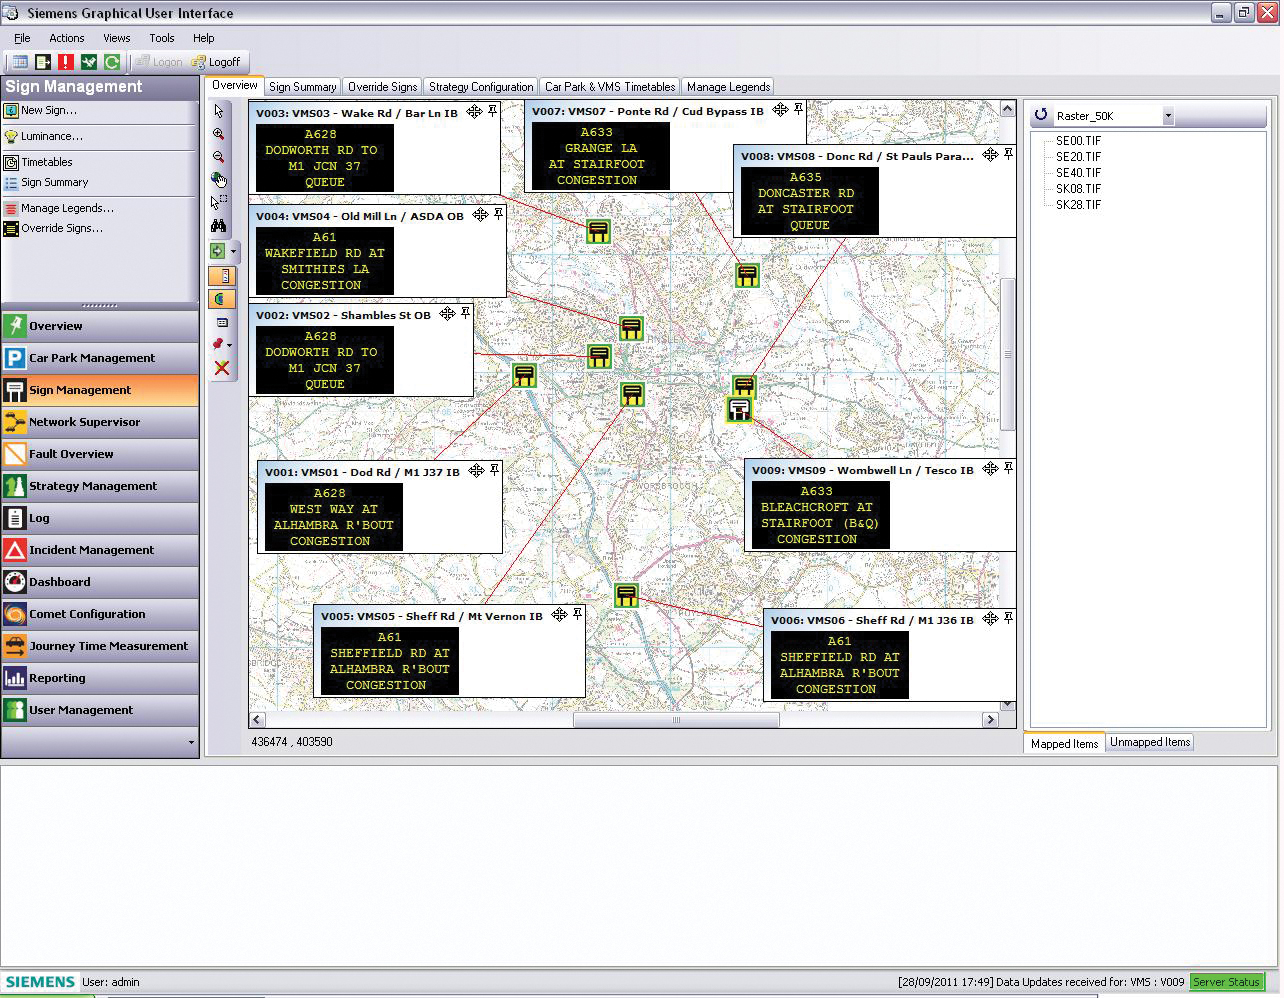 Barnsley’s system monitors traffic